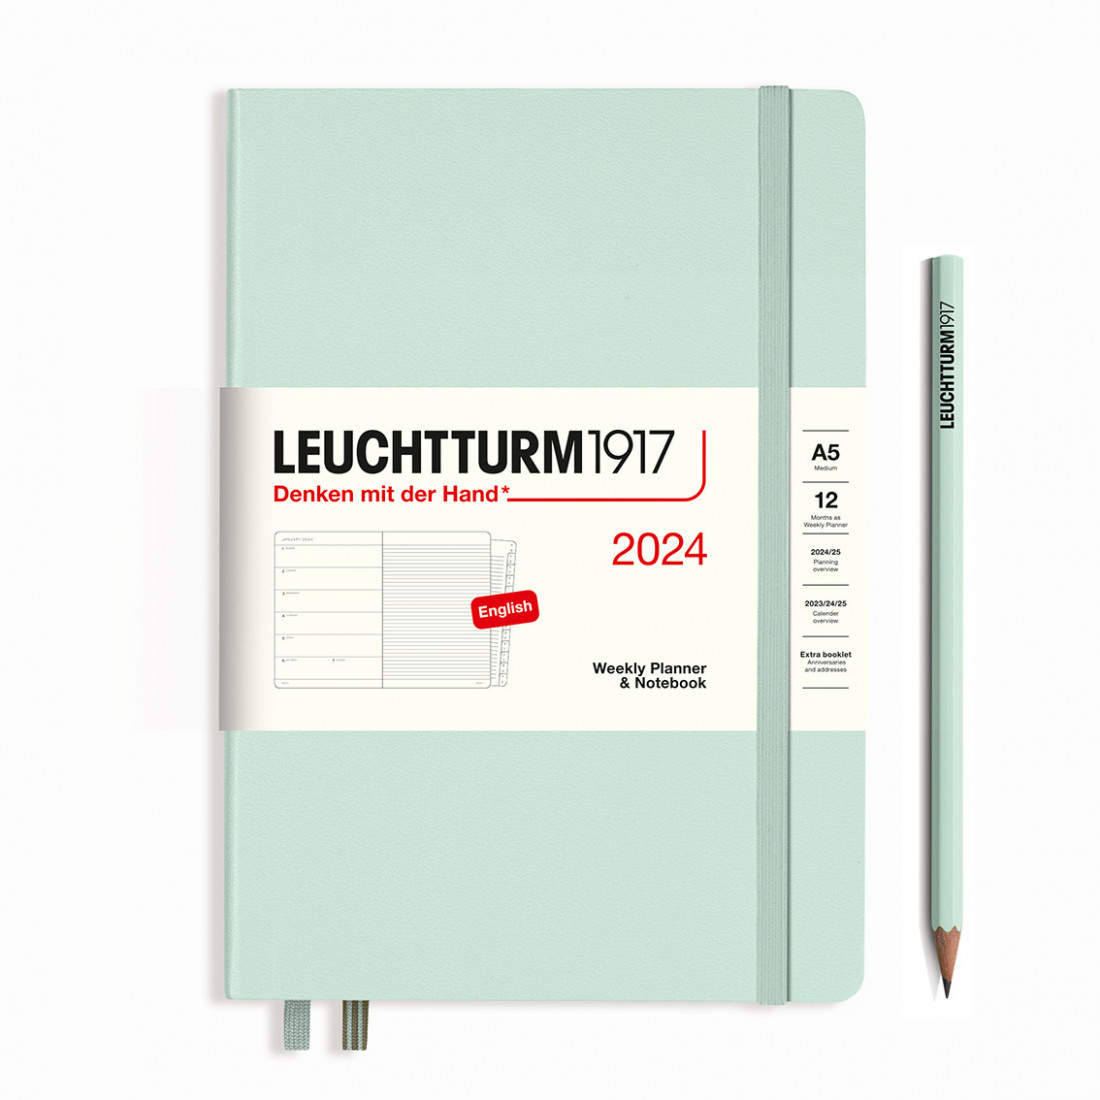 Leuchtturm 1917 Weekly Planner and Notebook 2024 Mint Green Medium A5 Hard Cover